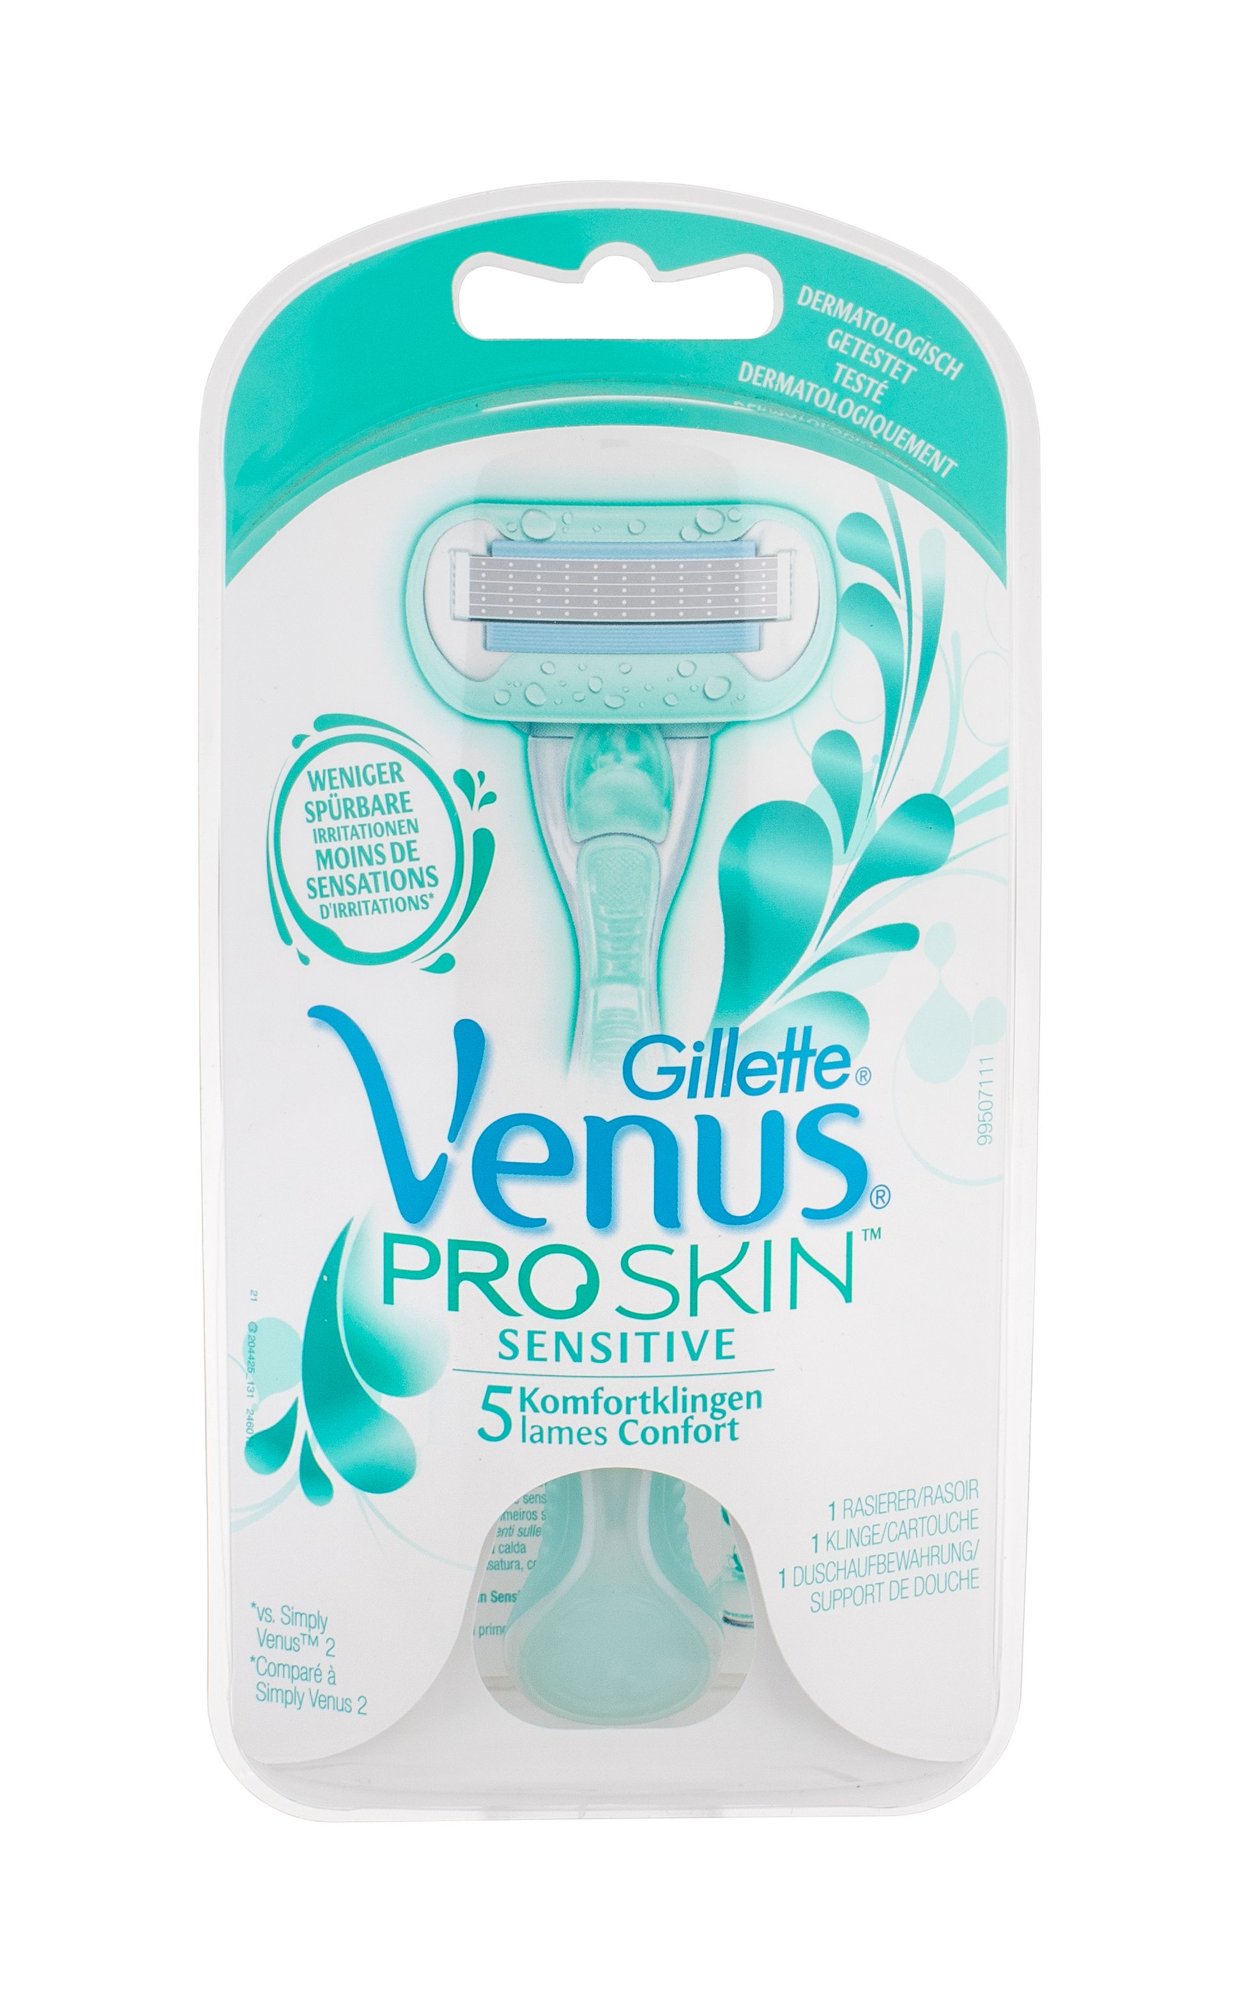 Gillette Venus ProSkin skustuvas